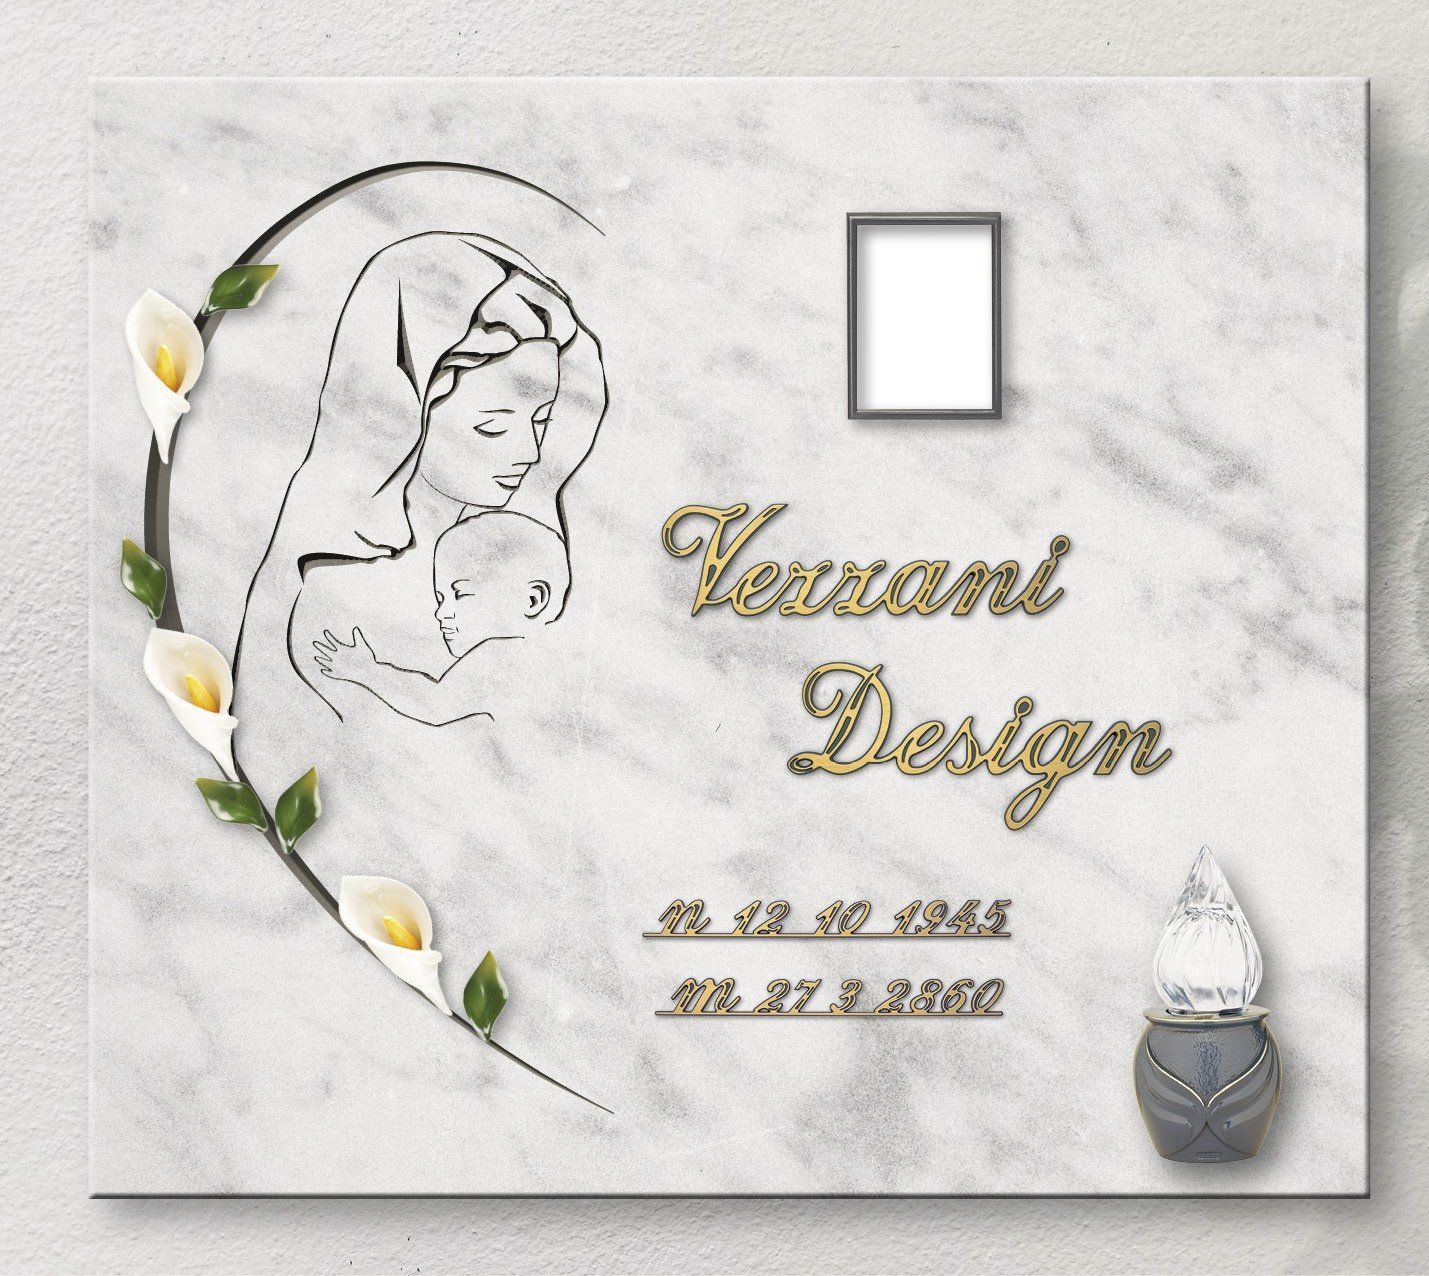 Niche with personalized engraving vezzani design 3